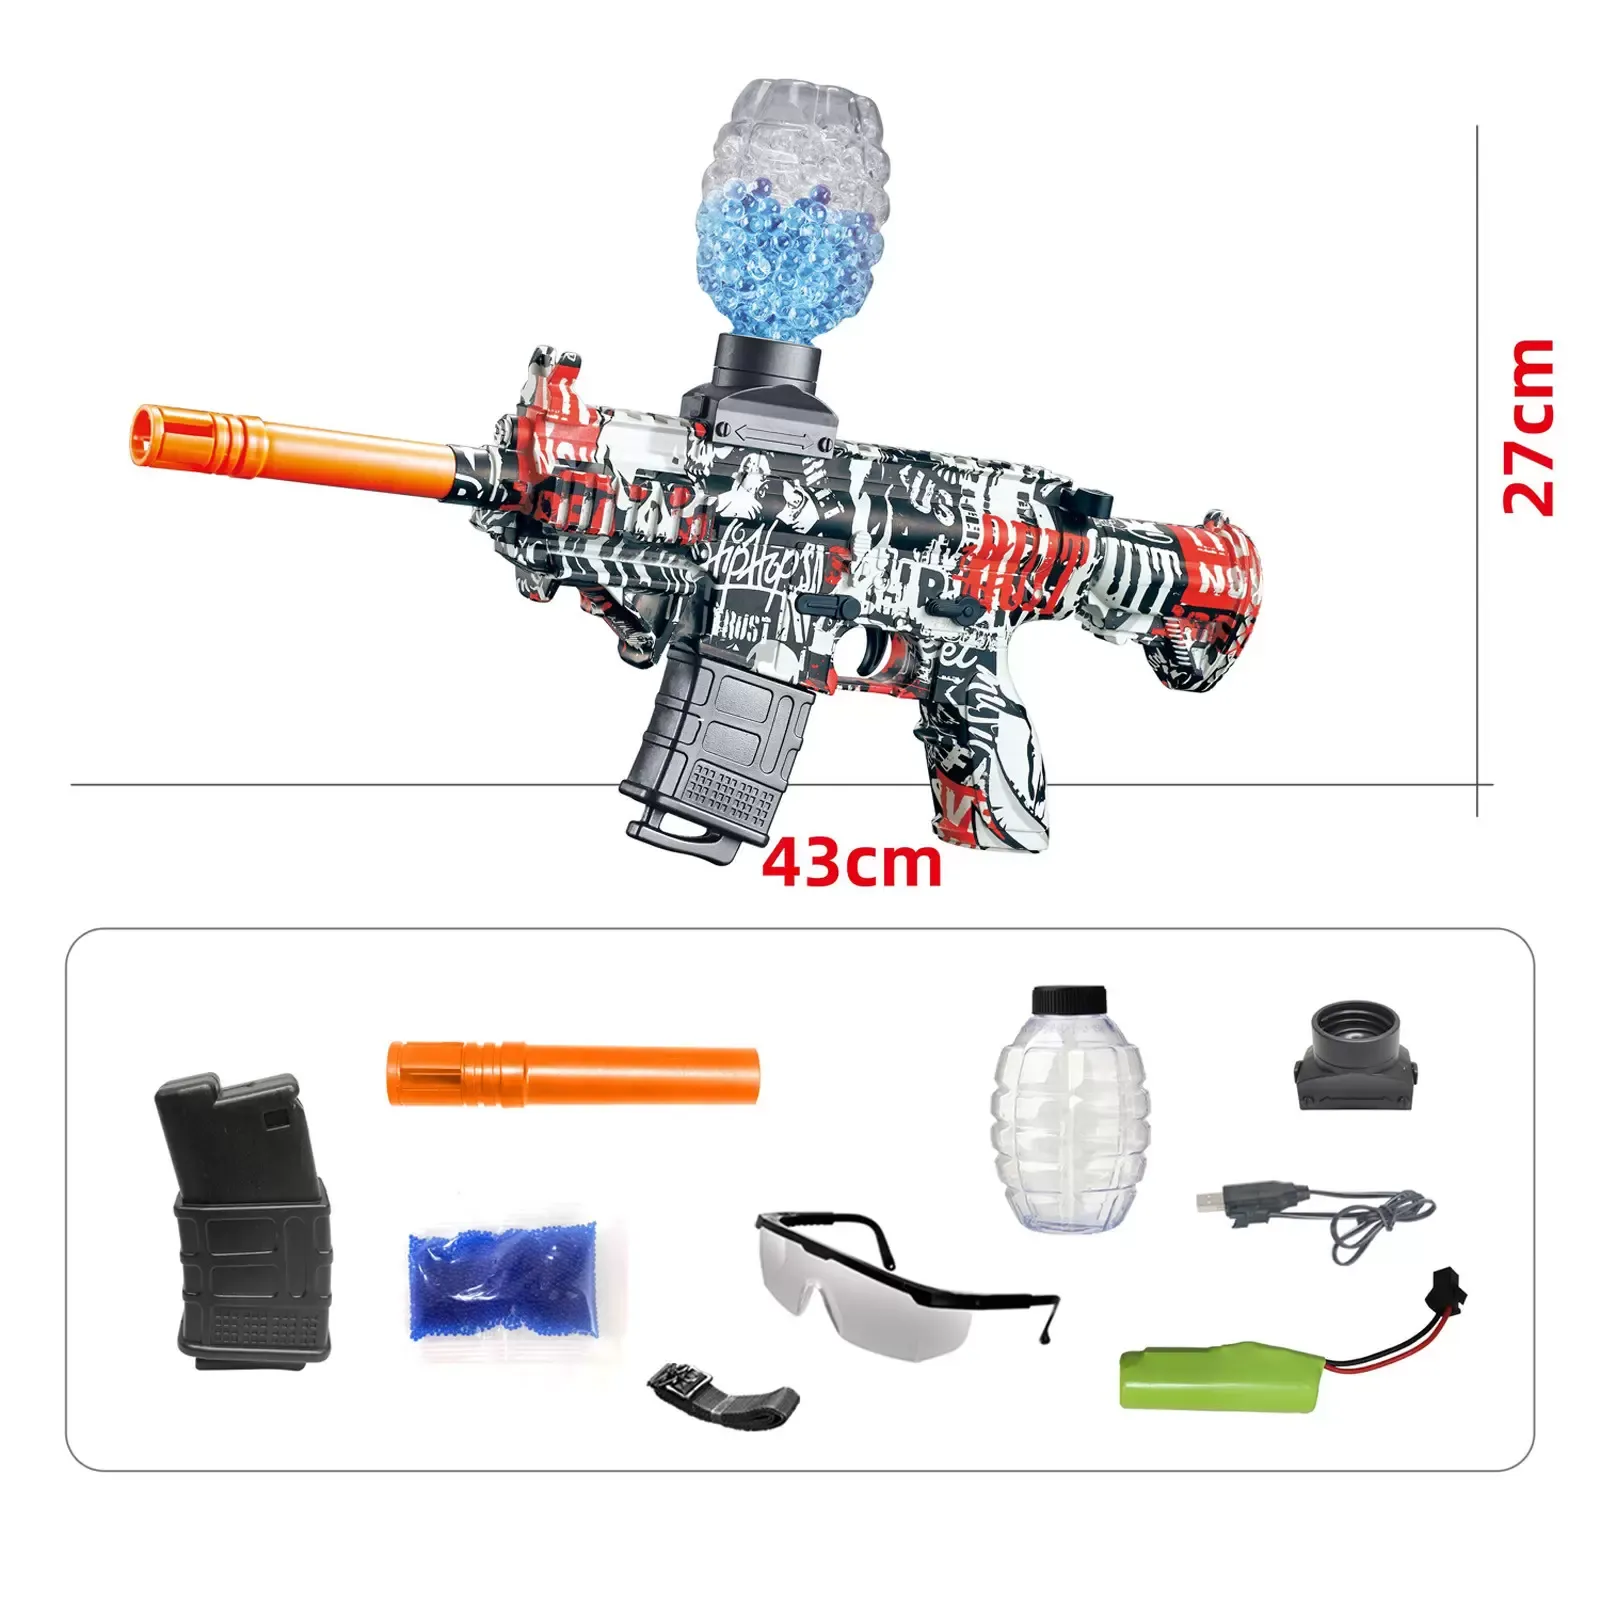 Water Bomb Shoots Gun Gel Ball Blaster Electric Splatter Ball Blaster For Outdoor Team Shooting Games For Boys Kids Toys Gift